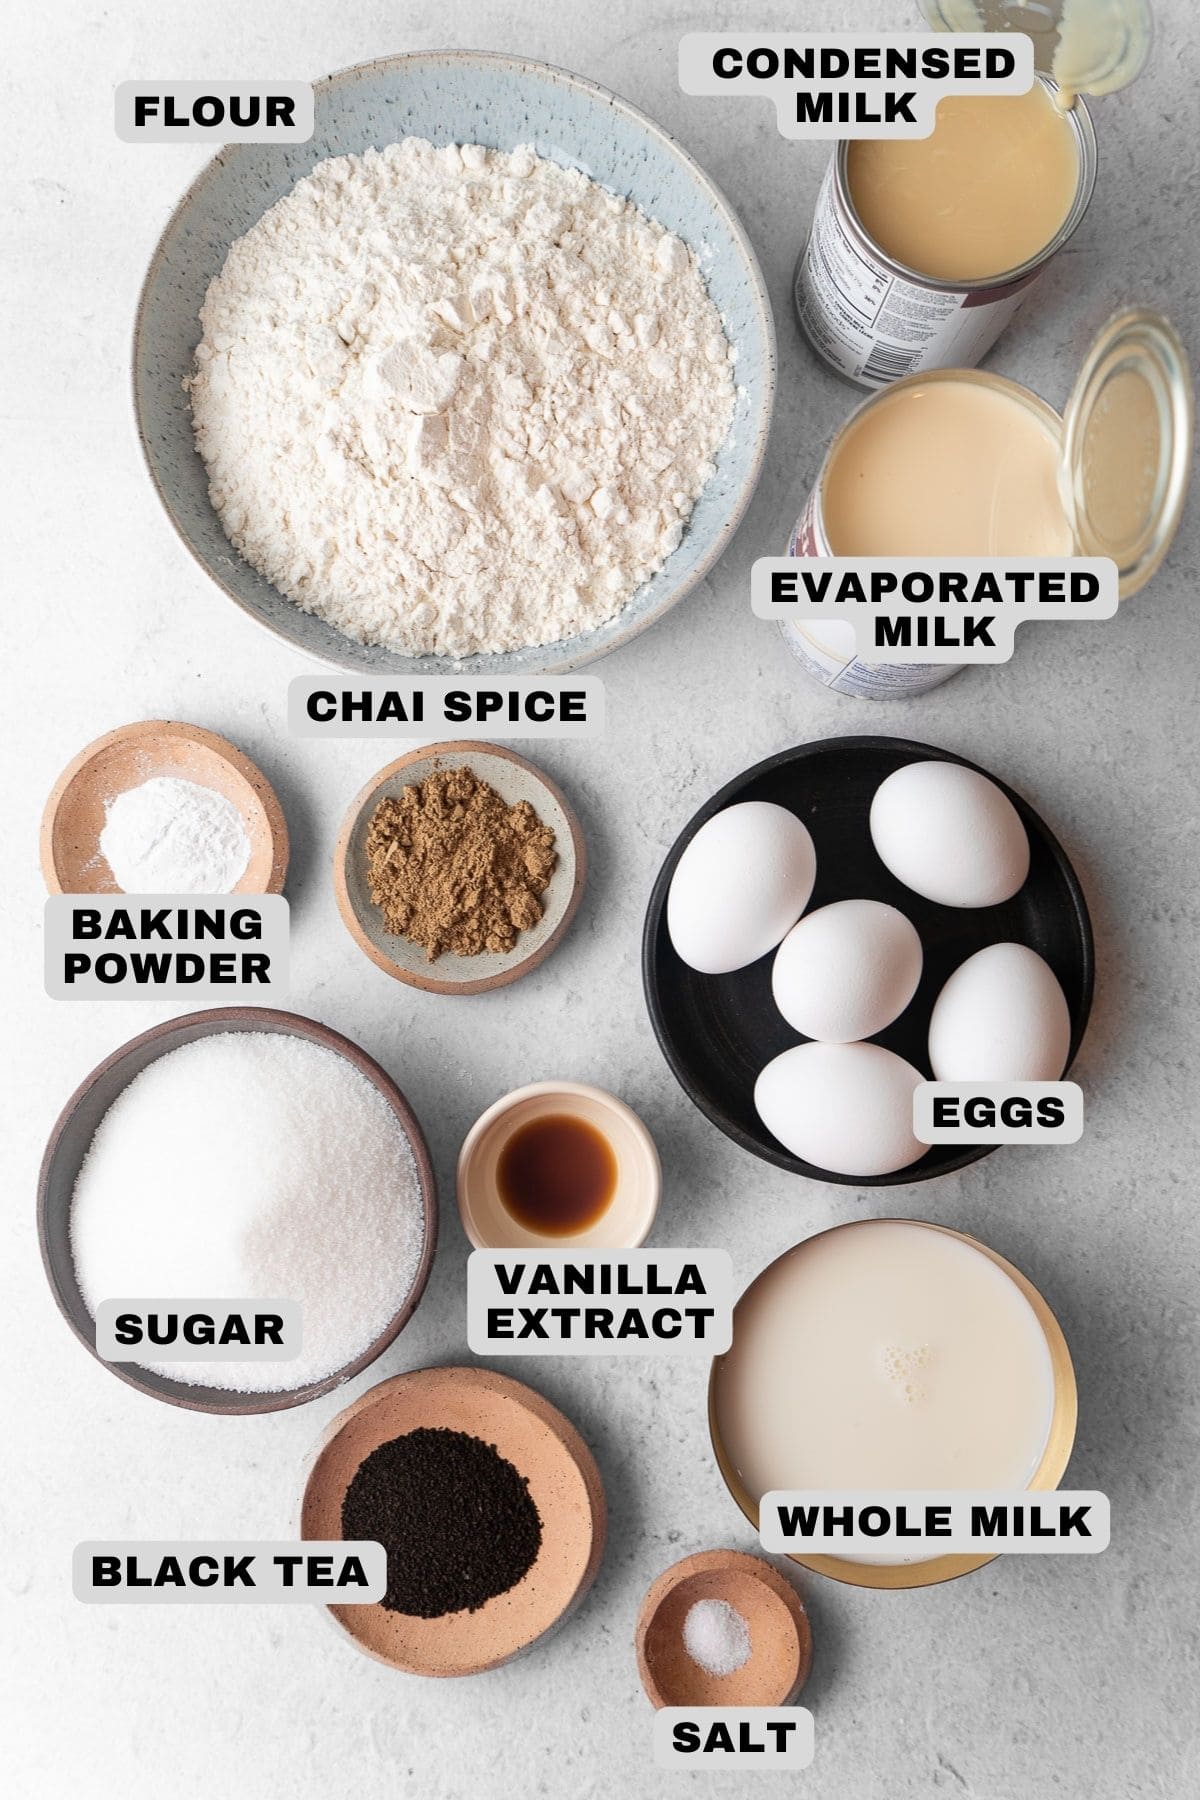 Flour, condensed milk, evaporated milk, chai spice, baking powder, eggs, vanilla extract, sugar, black tea, salt, whole milk ingredients with labels.